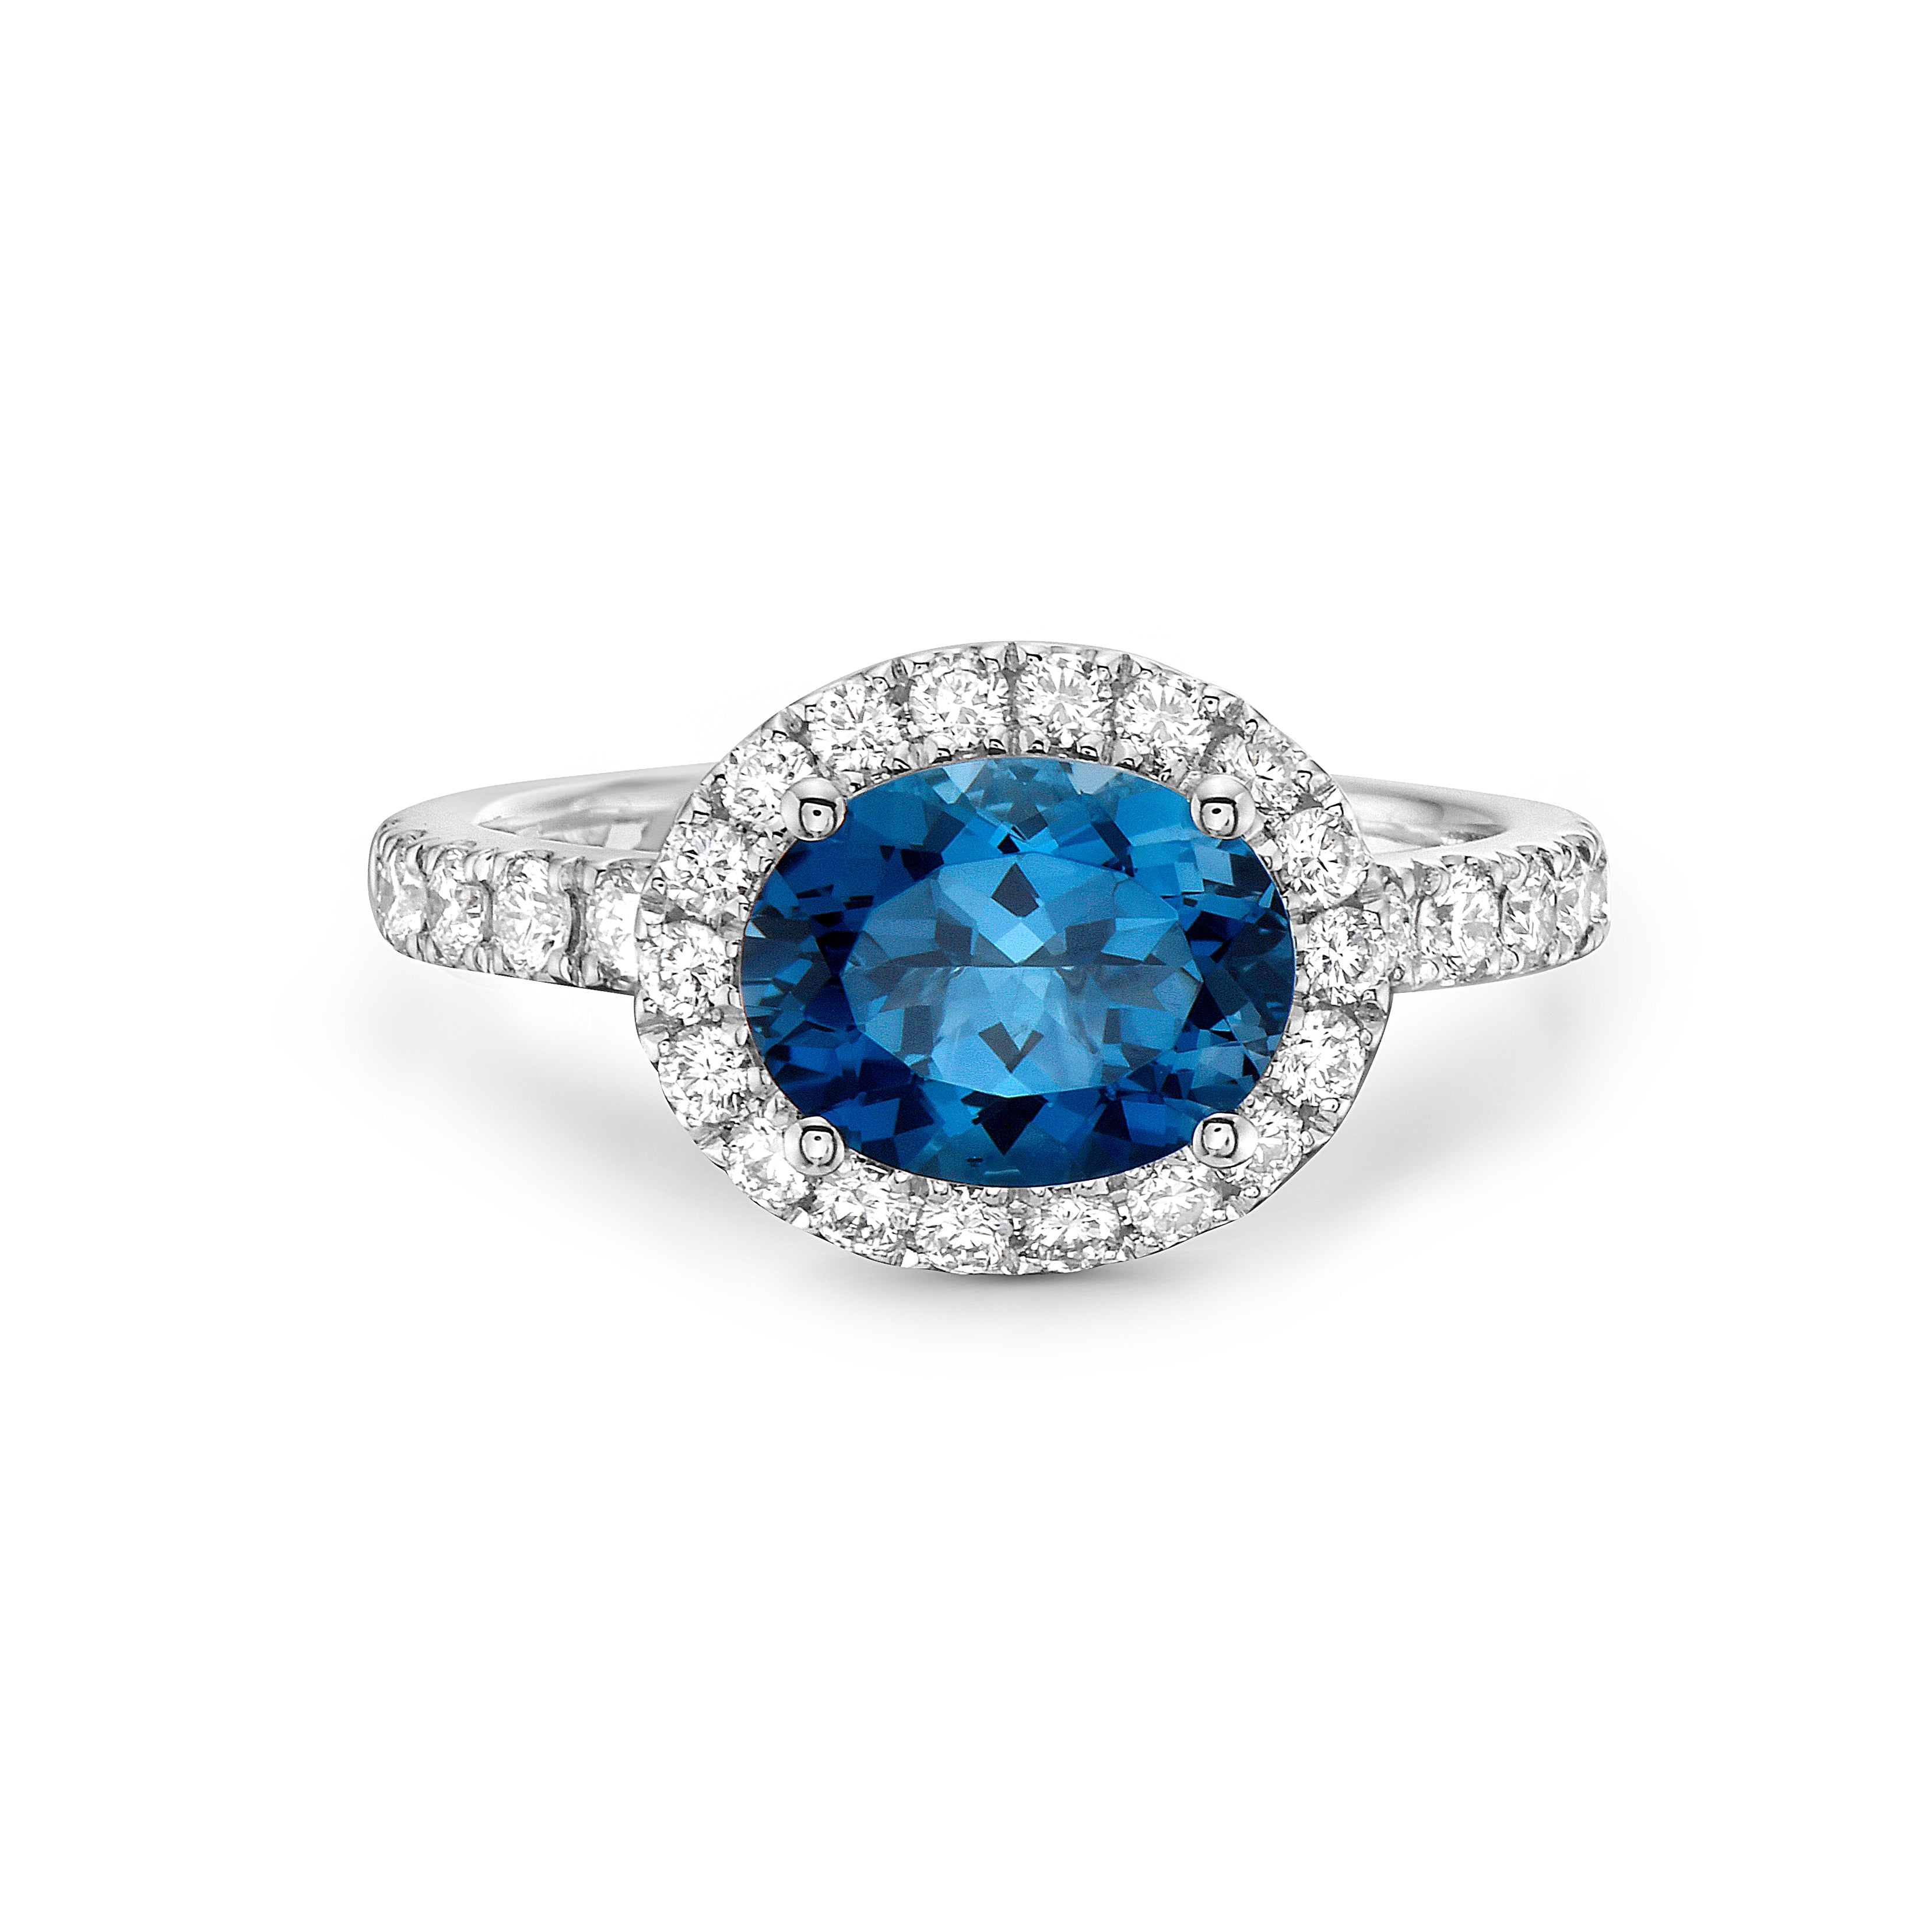 Oval London Blue Topaz Ring with Diamonds